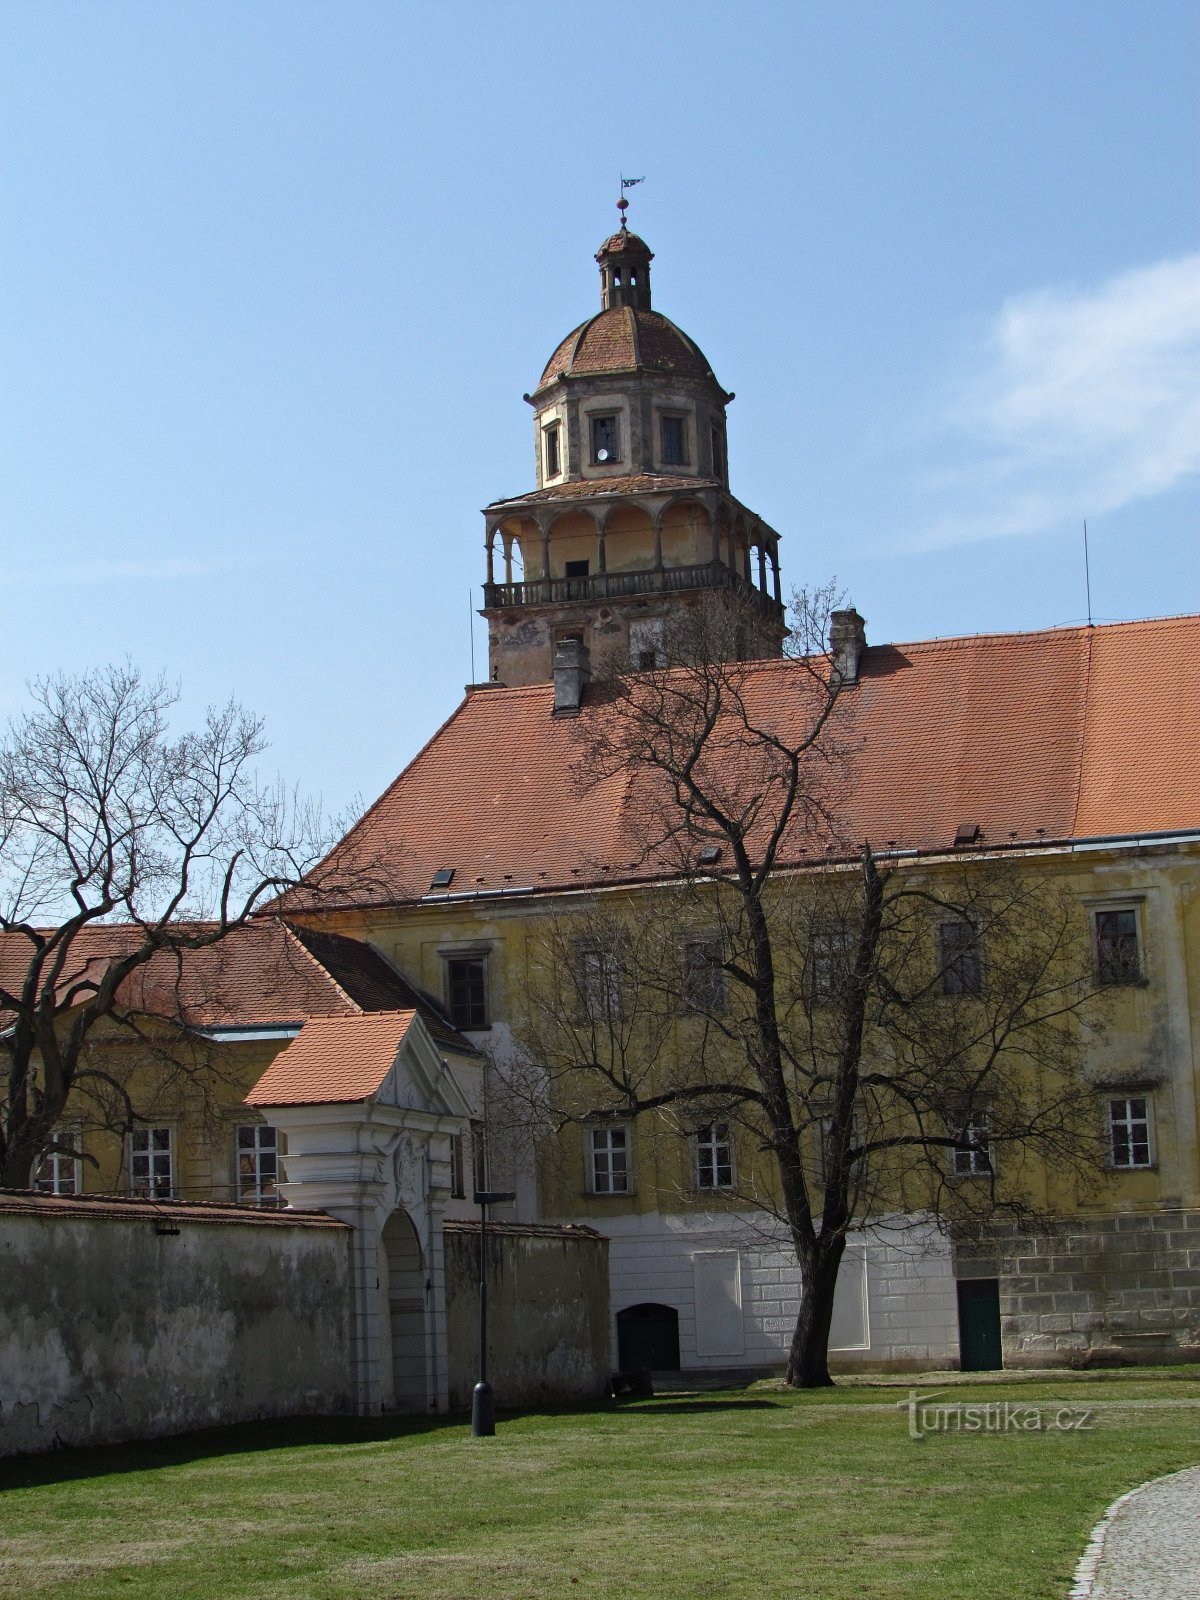 Complexo do castelo de Moravskokrumlov